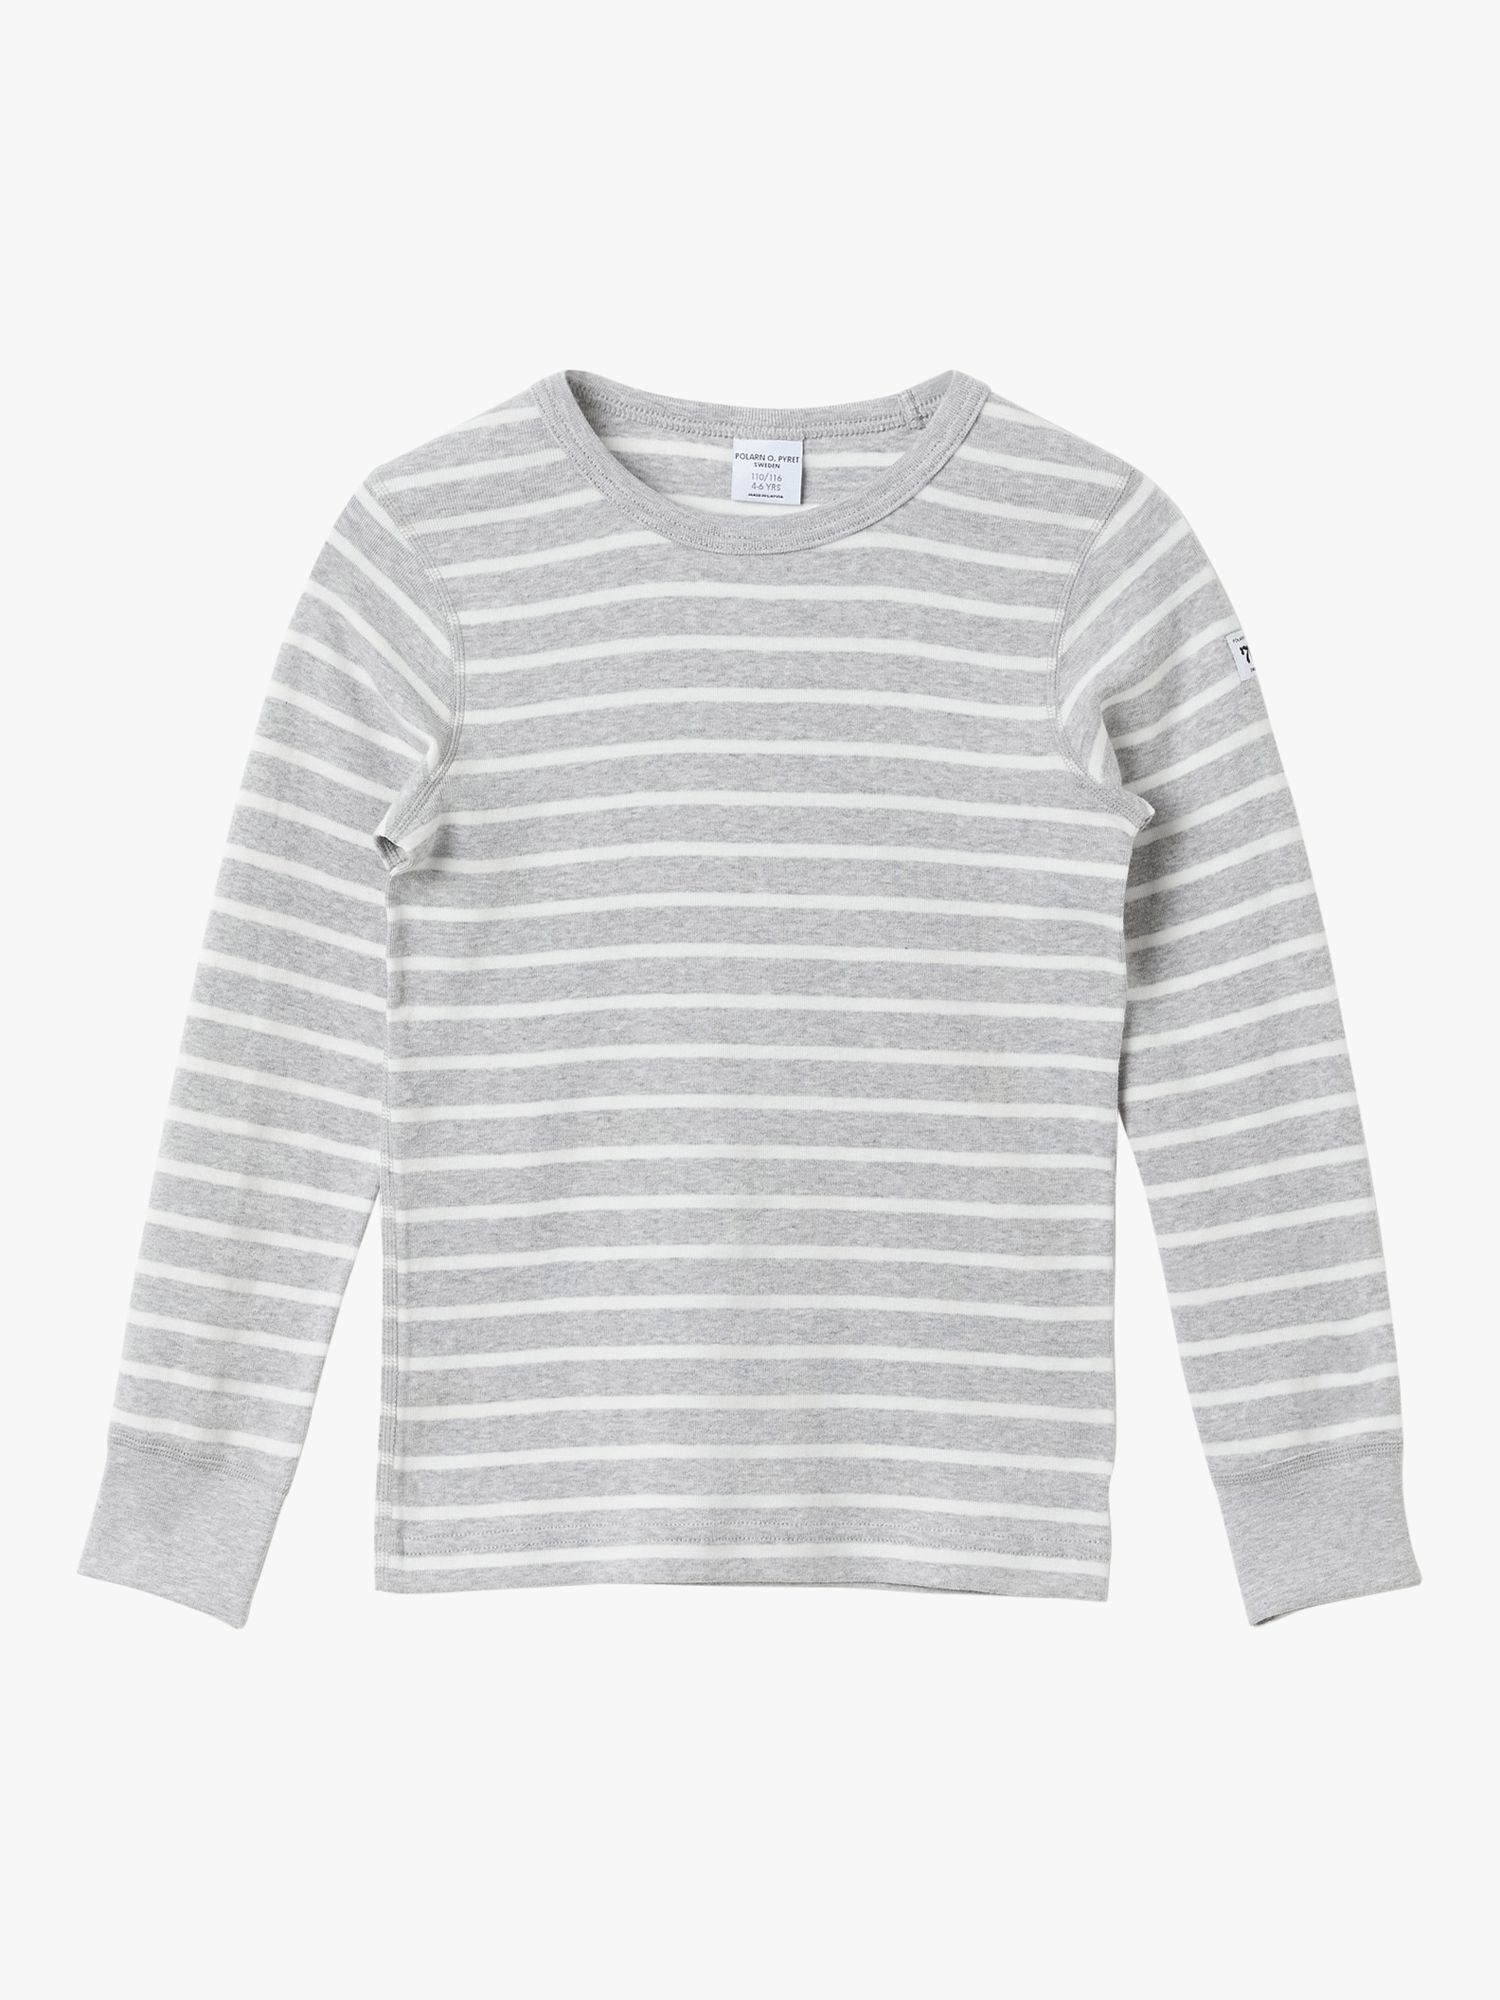 Polarn O. Pyret Kids' Organic Cotton Stripe Top, Grey/White, 2-3 years